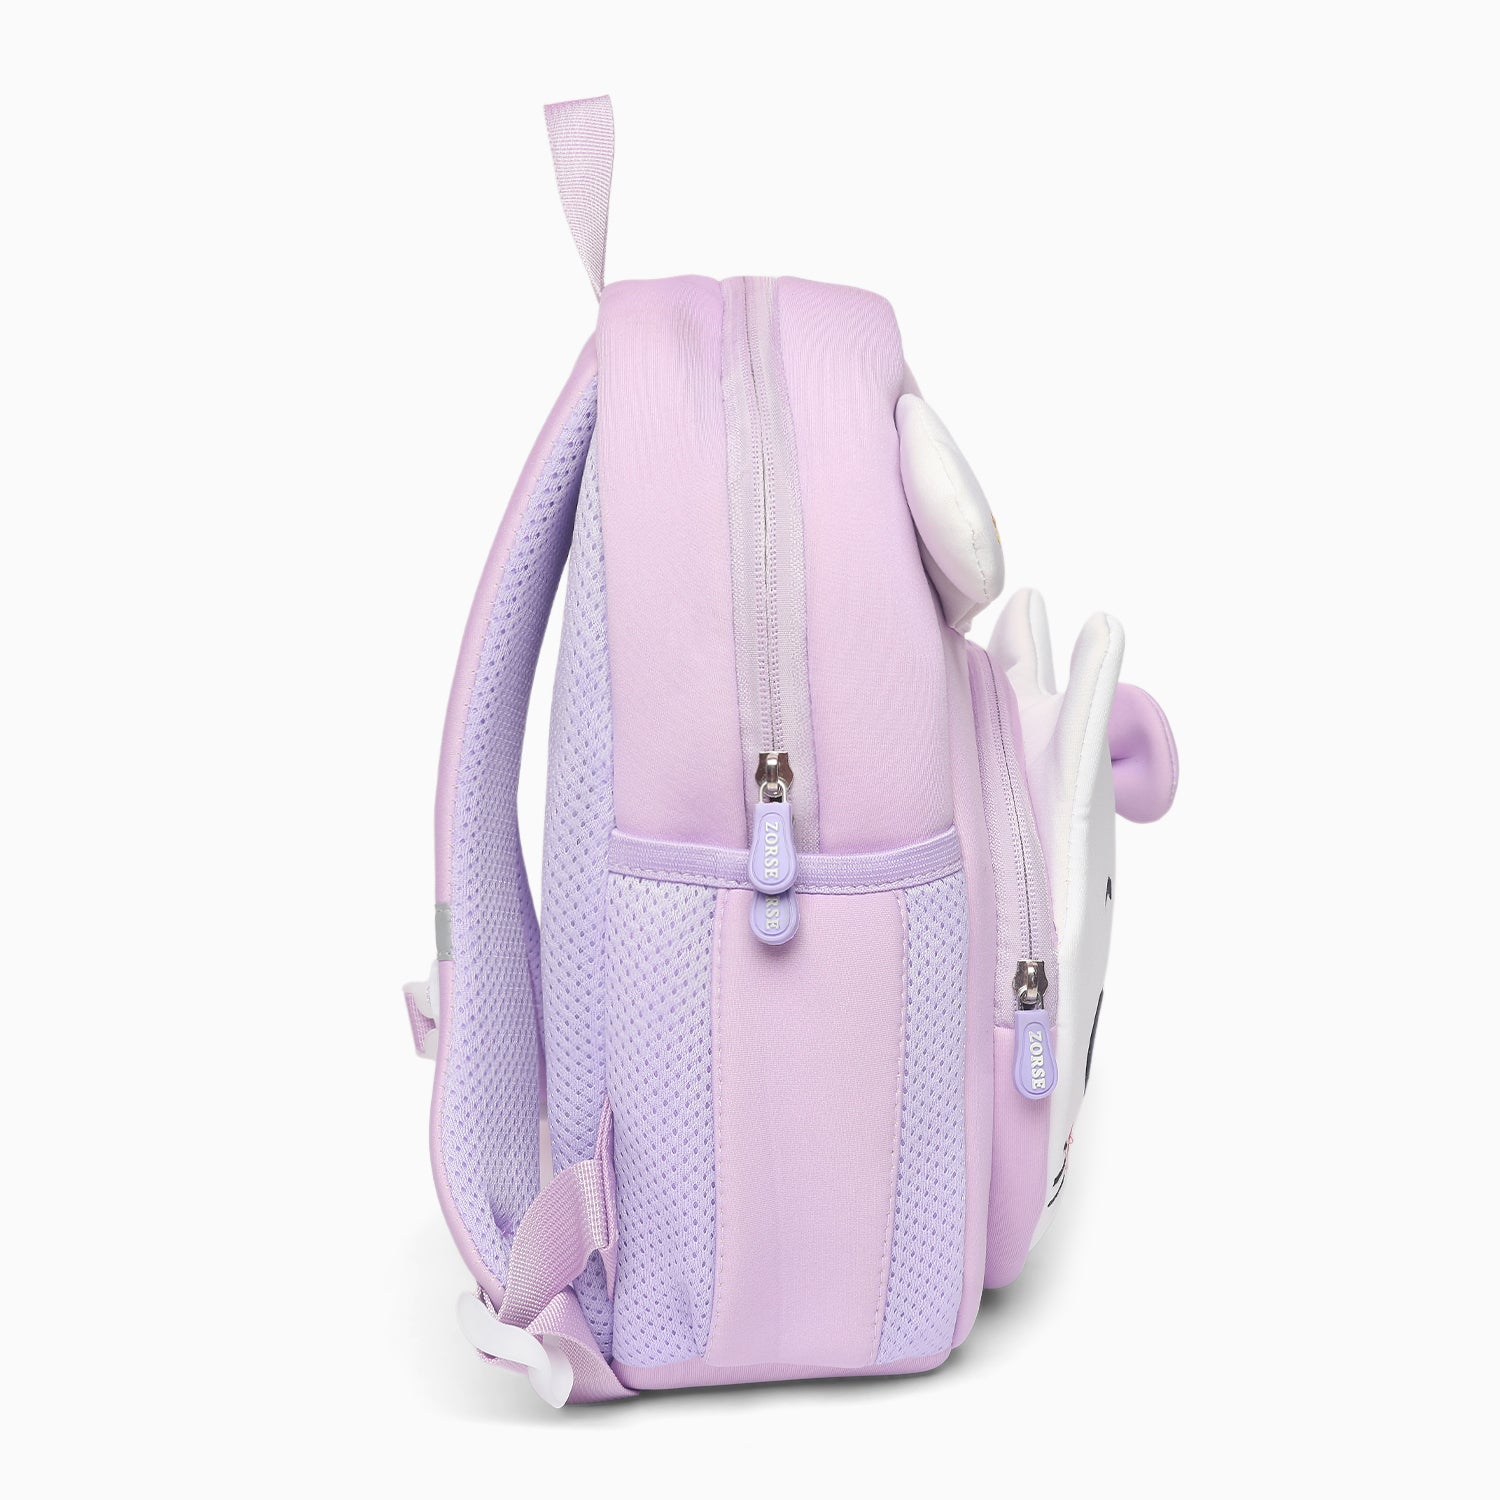 ZORSE premium quality 3D kitten bag for kids SMALL size (purple)